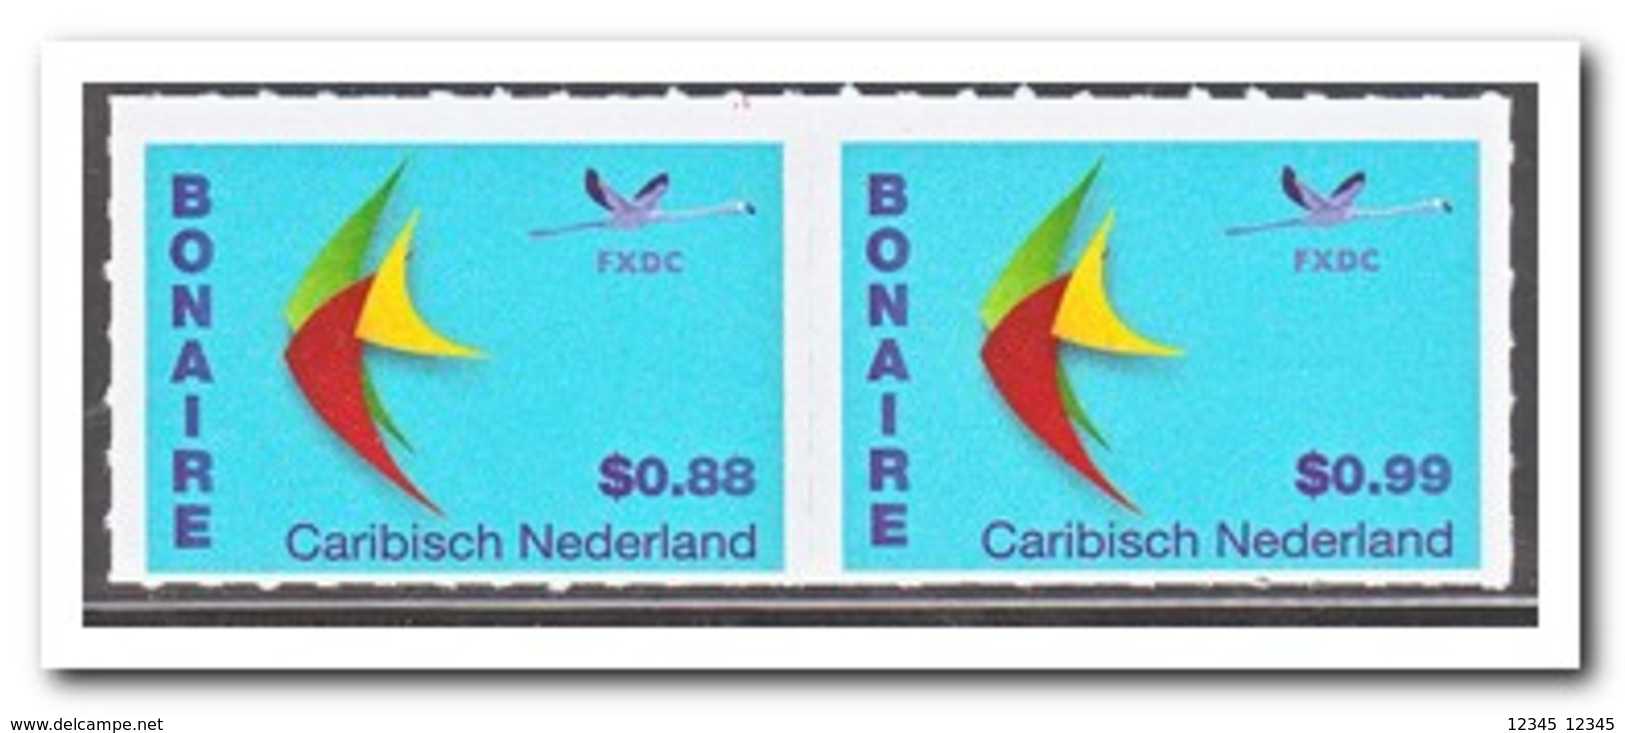 Caribisch Nederland 2015, Postfris MNH, Birds - Curaçao, Nederlandse Antillen, Aruba